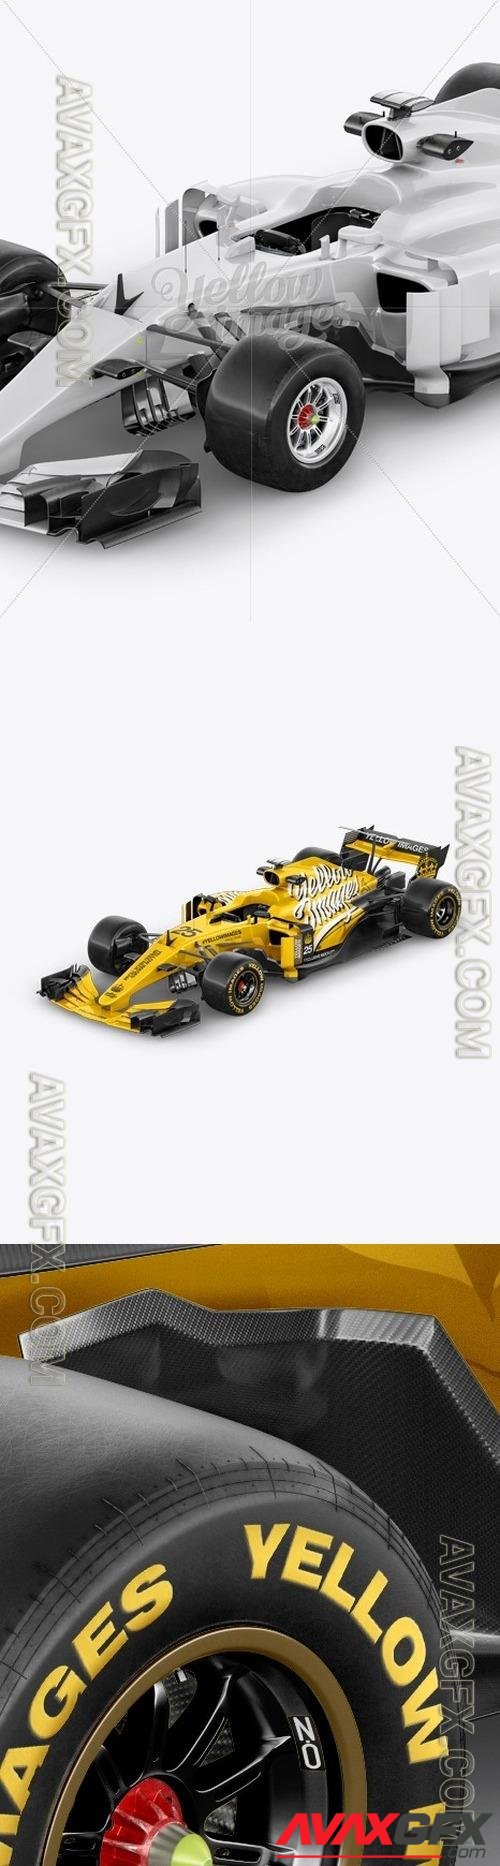 2017 Formula 1 Car Mockup Half side view (High-Angle Shot) 18333